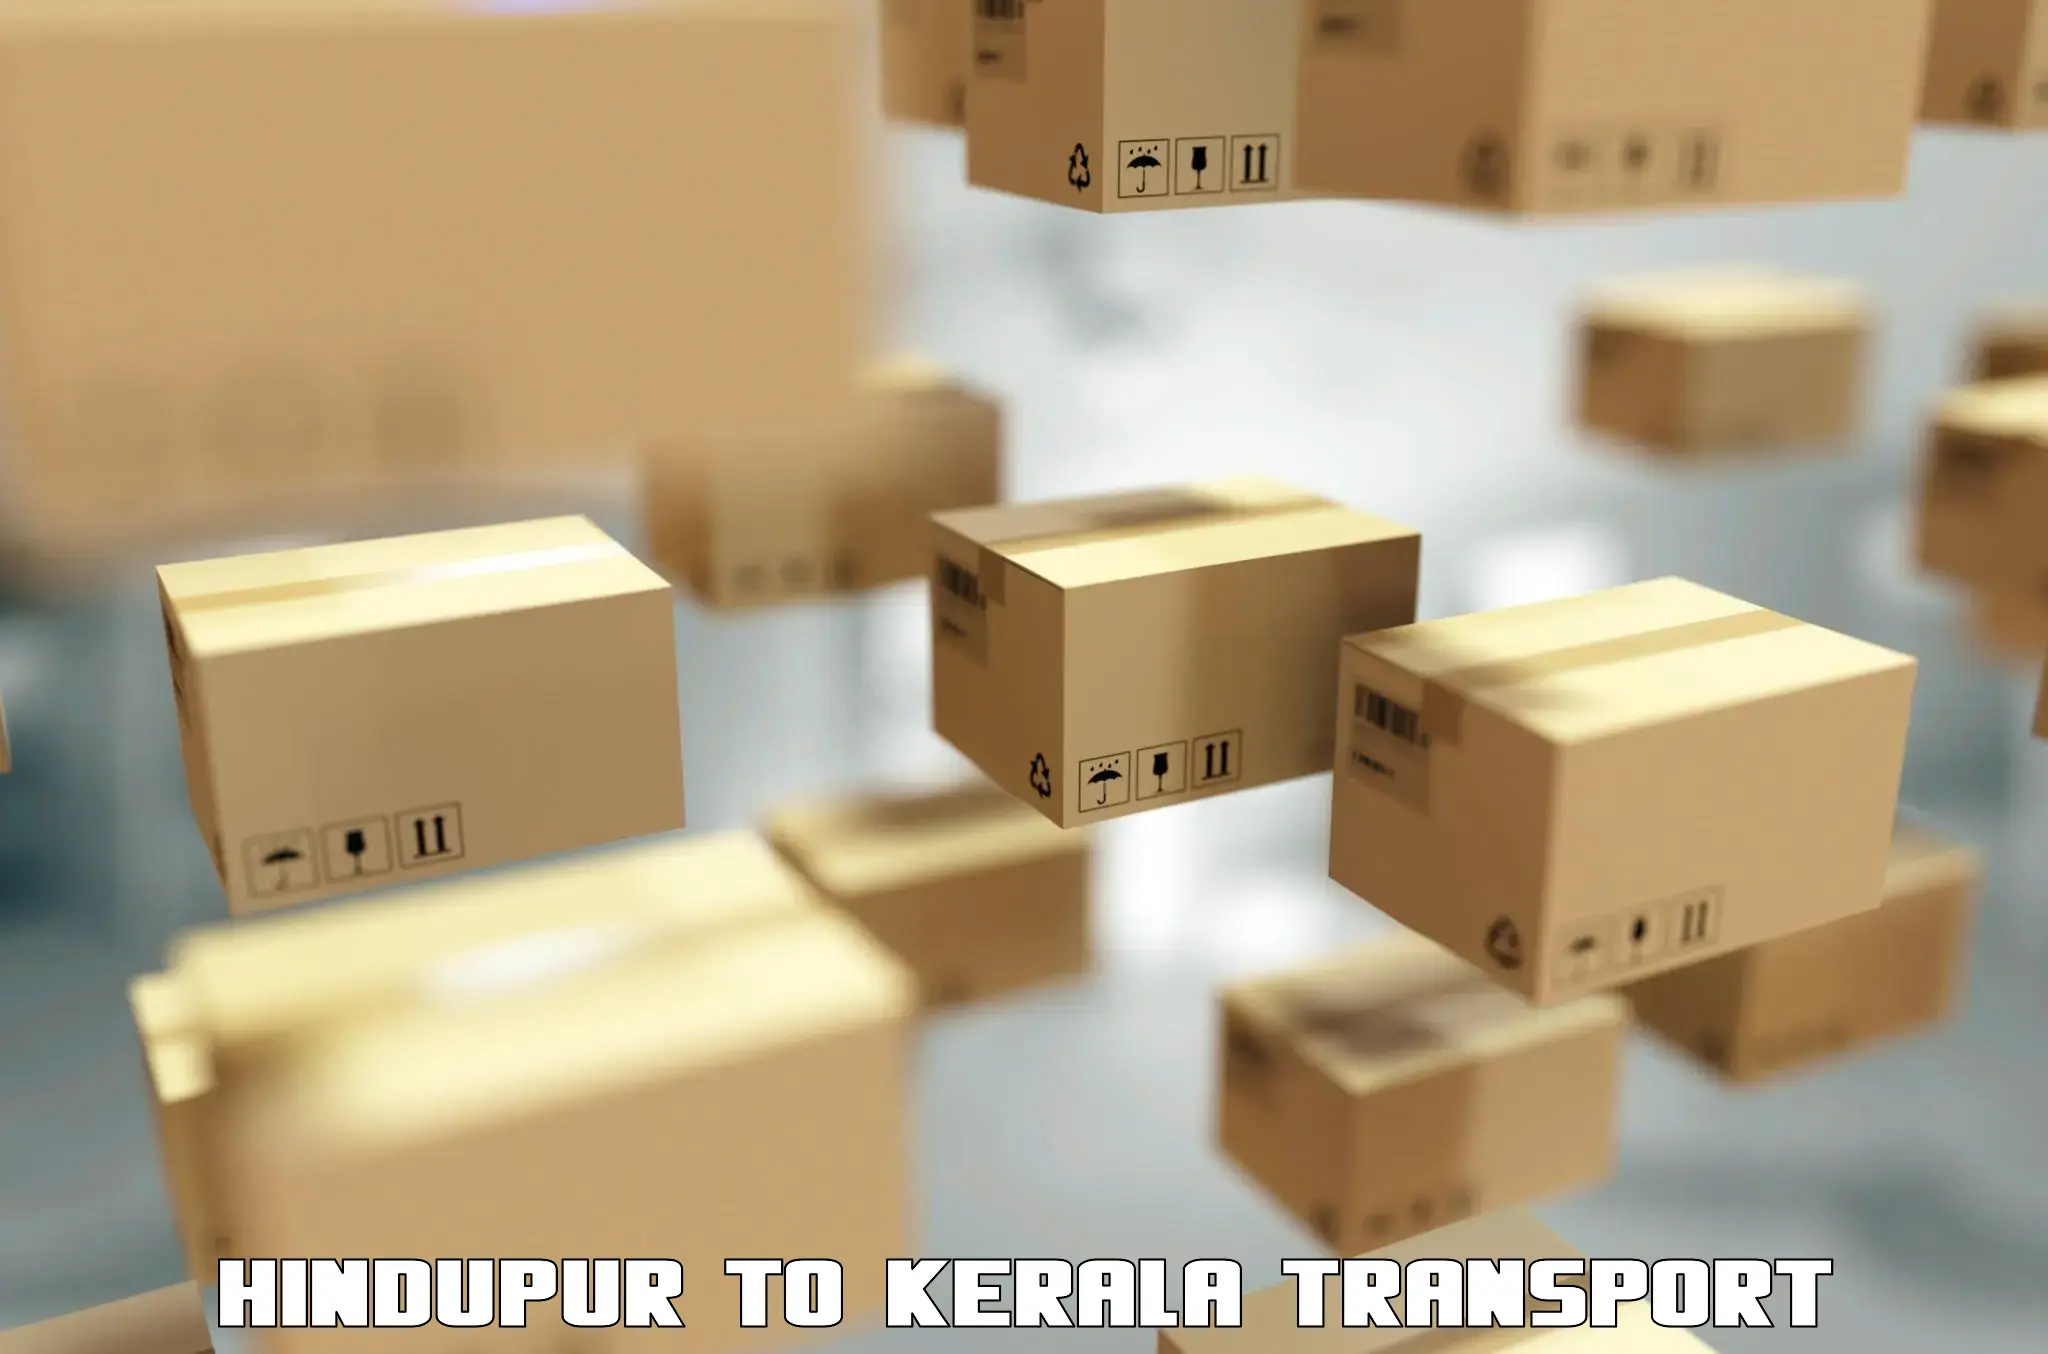 Transport in sharing in Hindupur to Kerala